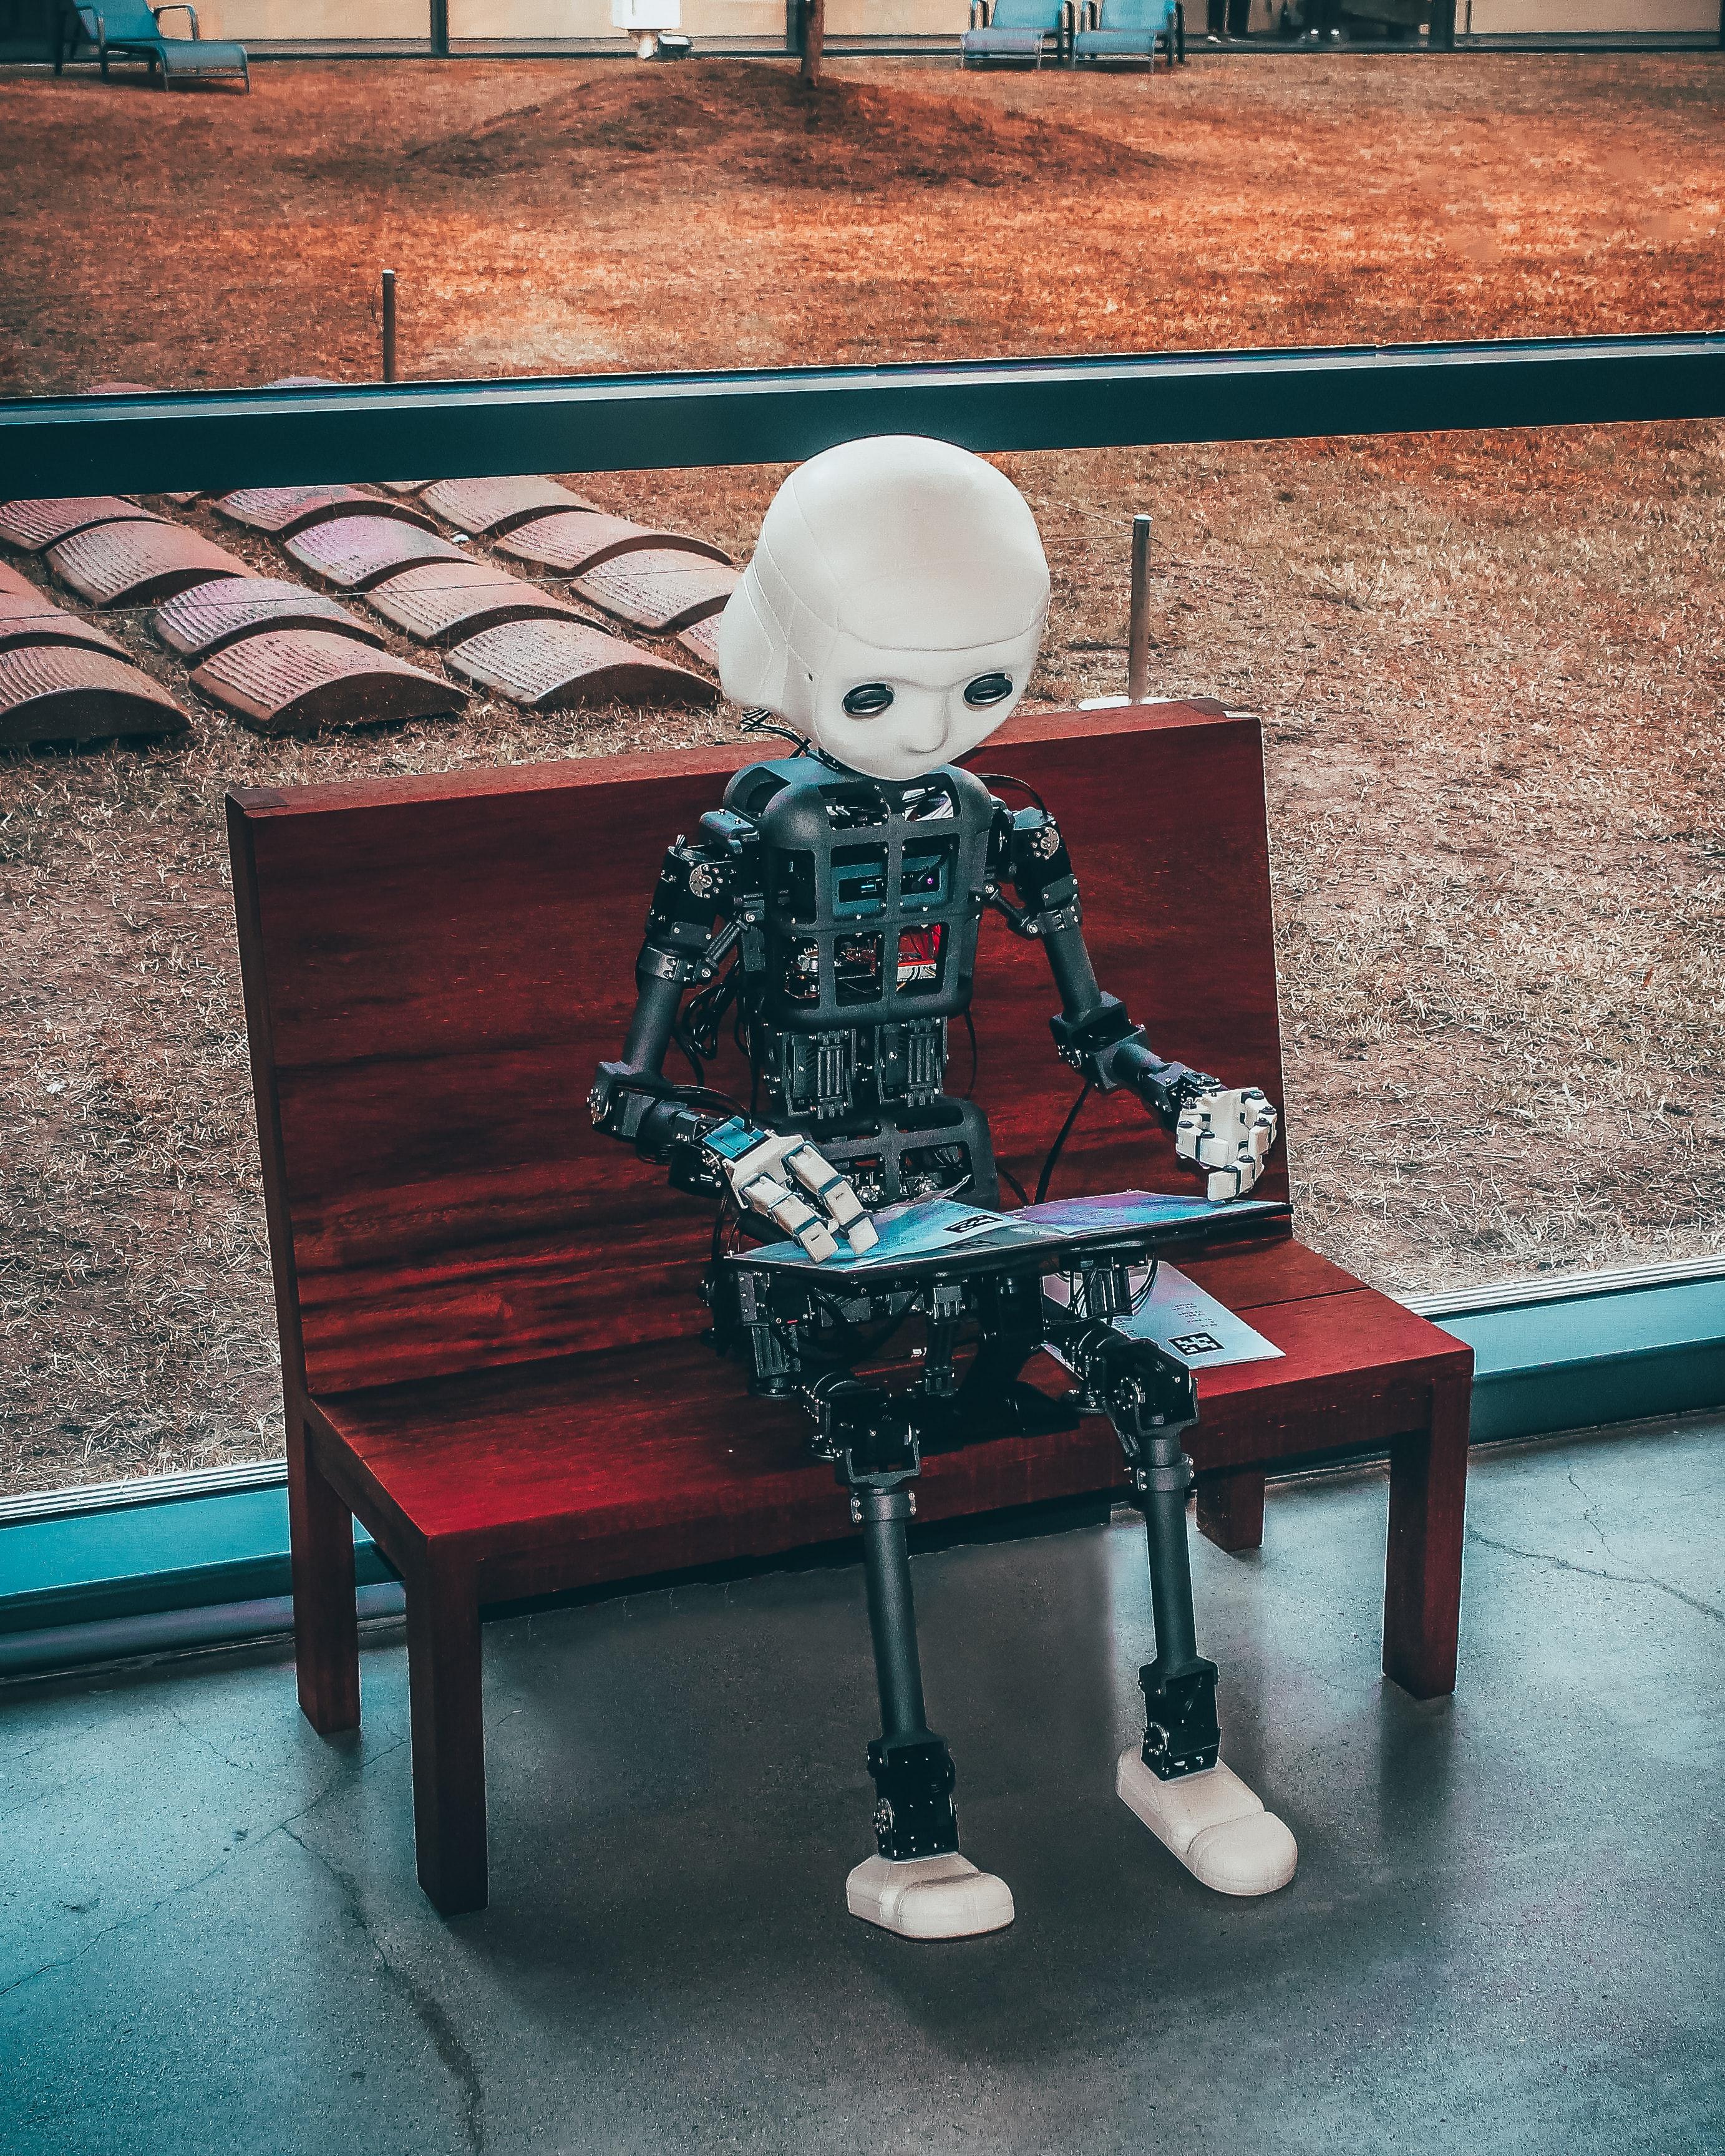 A humanoid robot at work